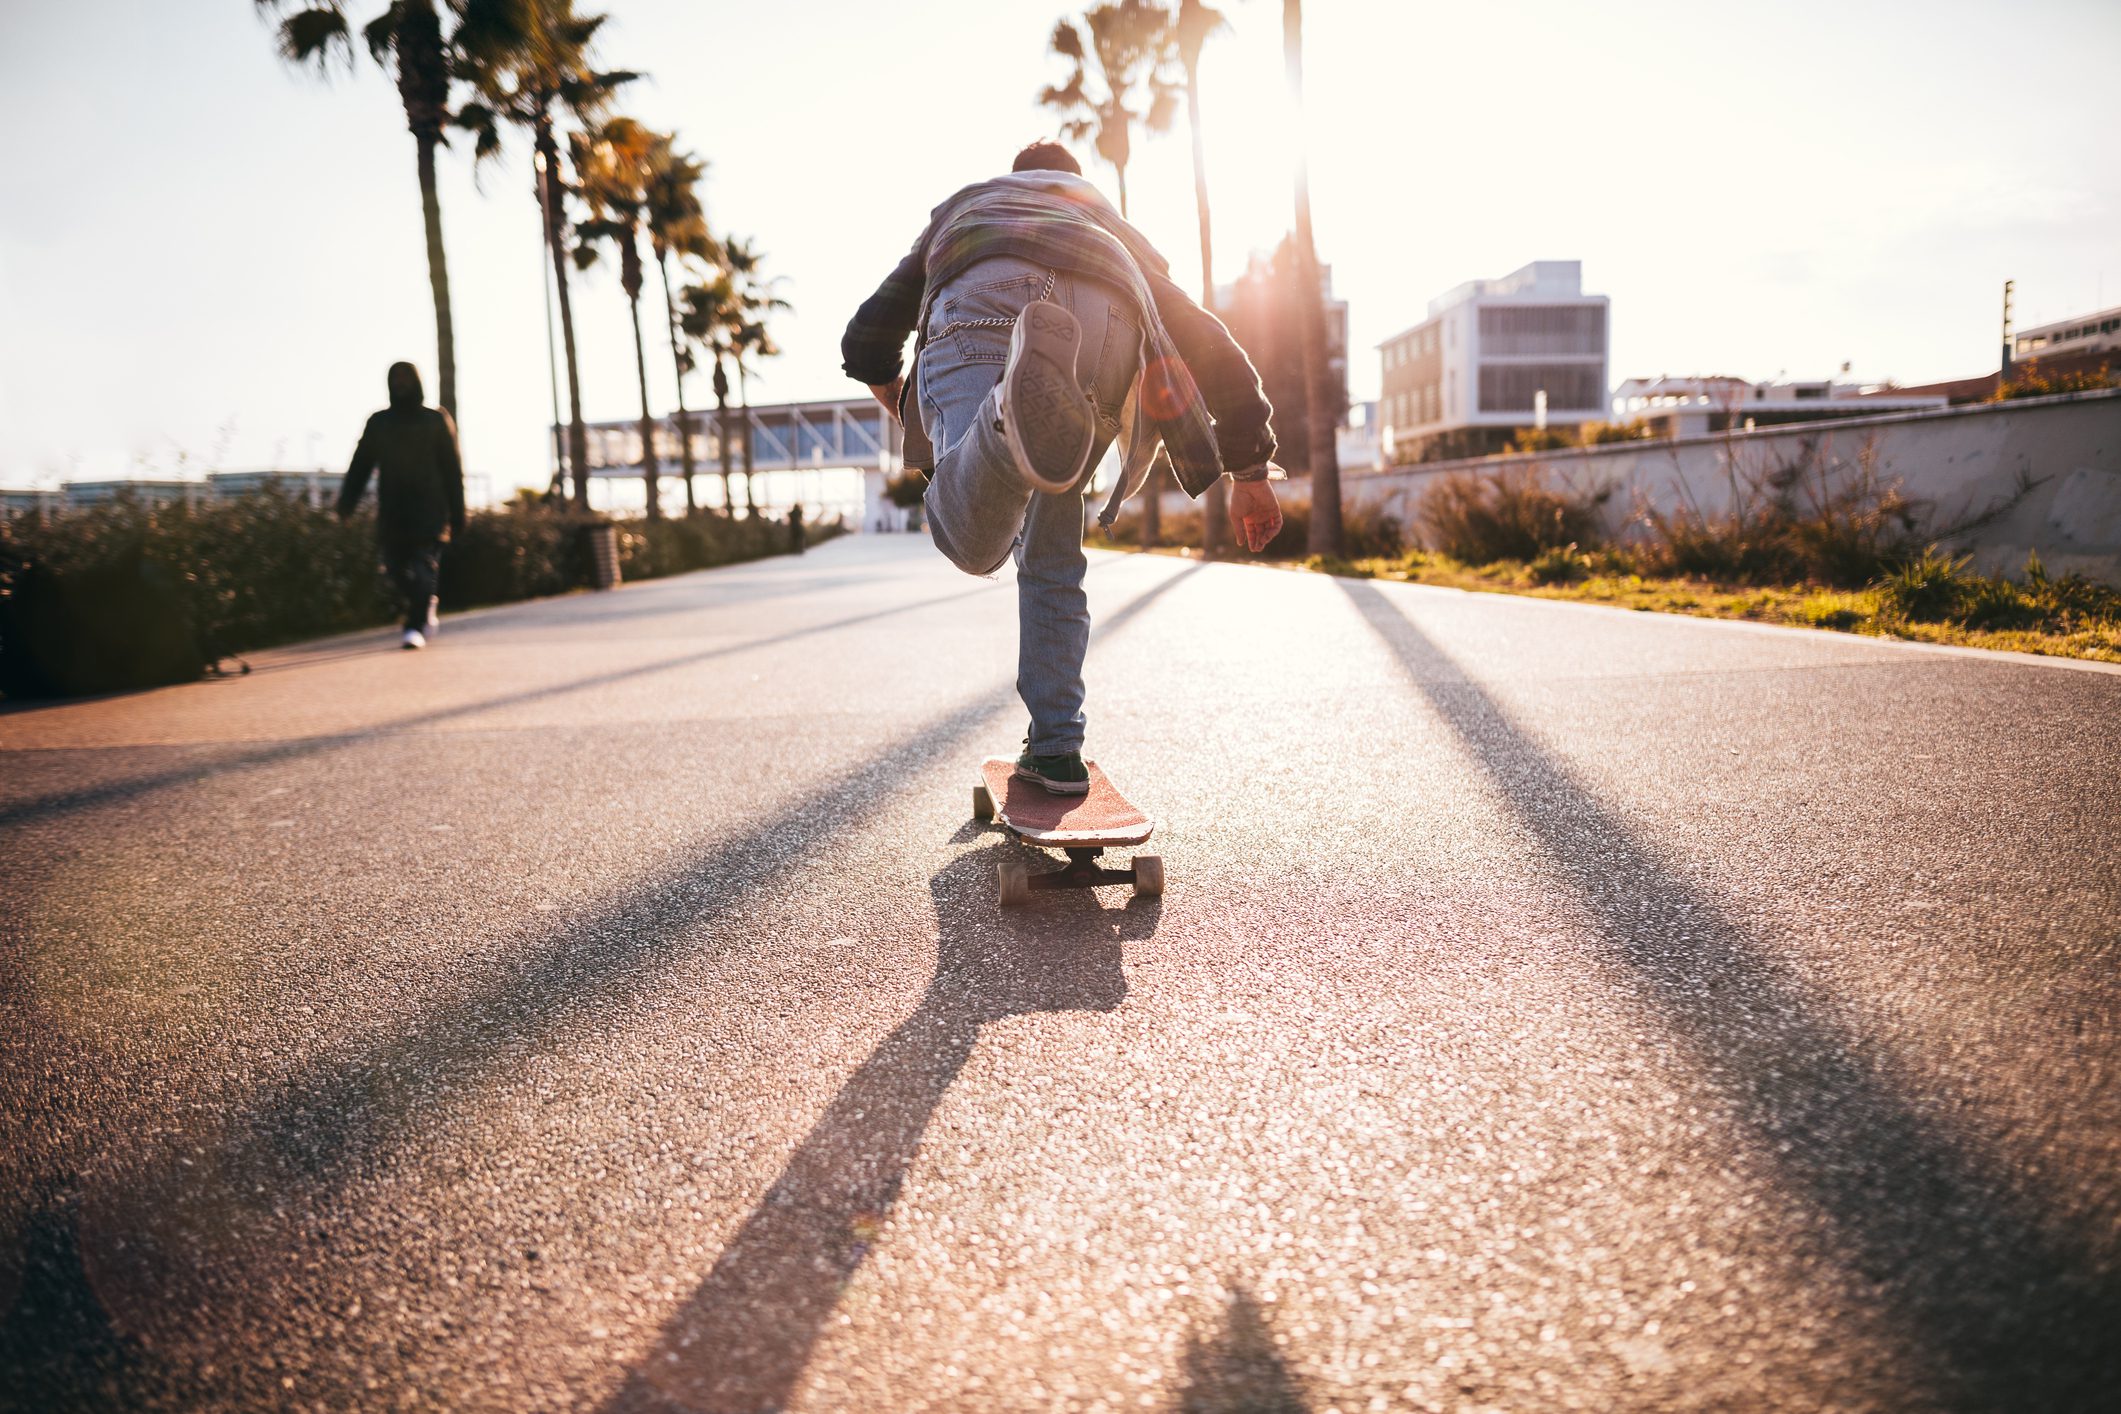 Cool teenage boy skateboarding in urban park as a hobby